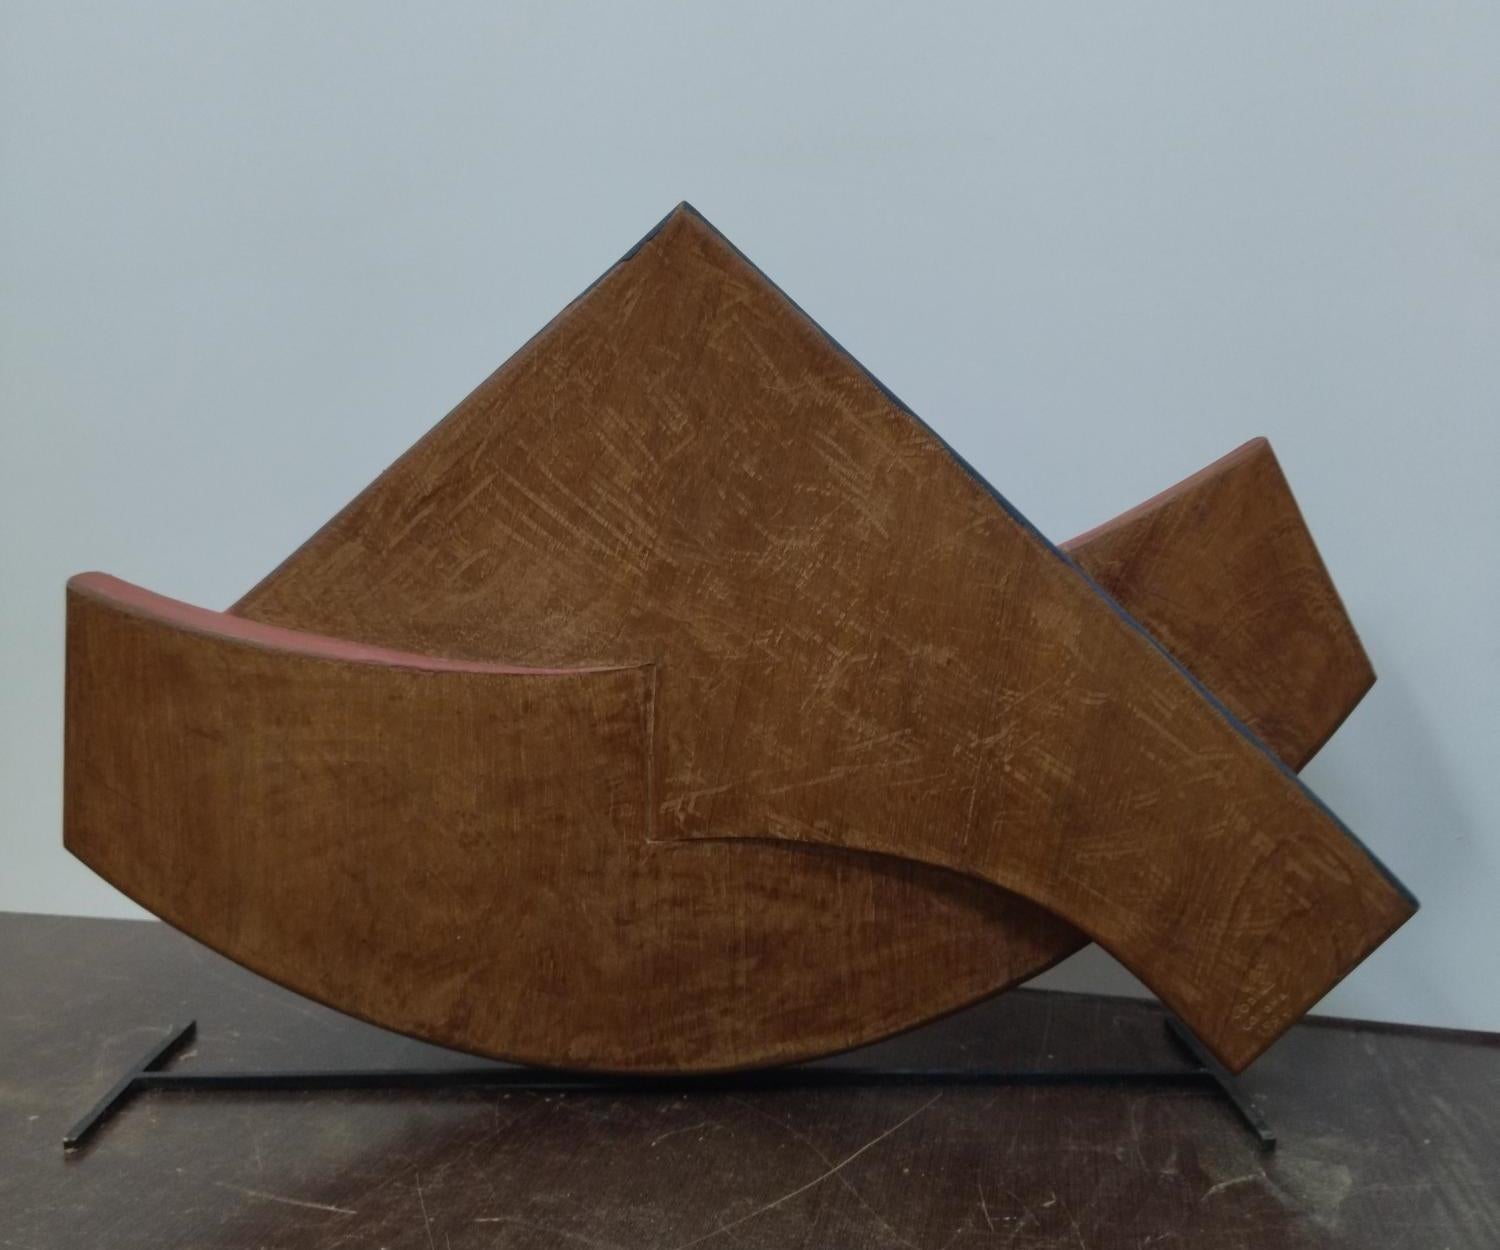  Codina Corona.  Boot   la barca  Originale realistische Holzskulptur – – Sculpture von Josep Maria Codina Corona